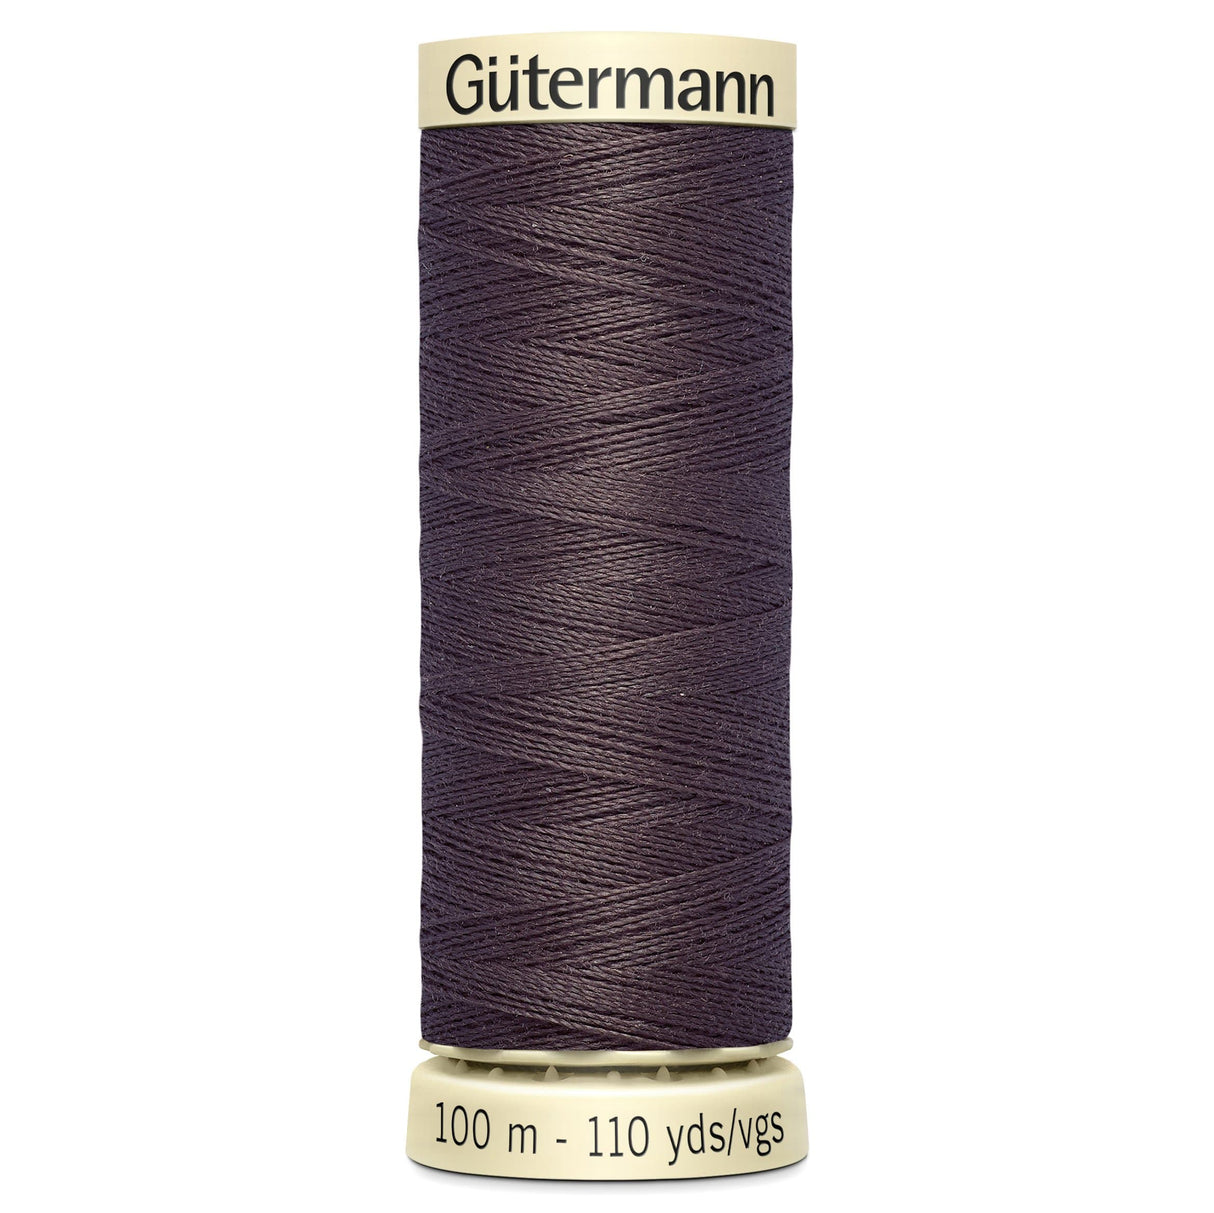 Groves Haberdashery 540 Gutermann Thread Sewing Cotton 100 m Black to Pink